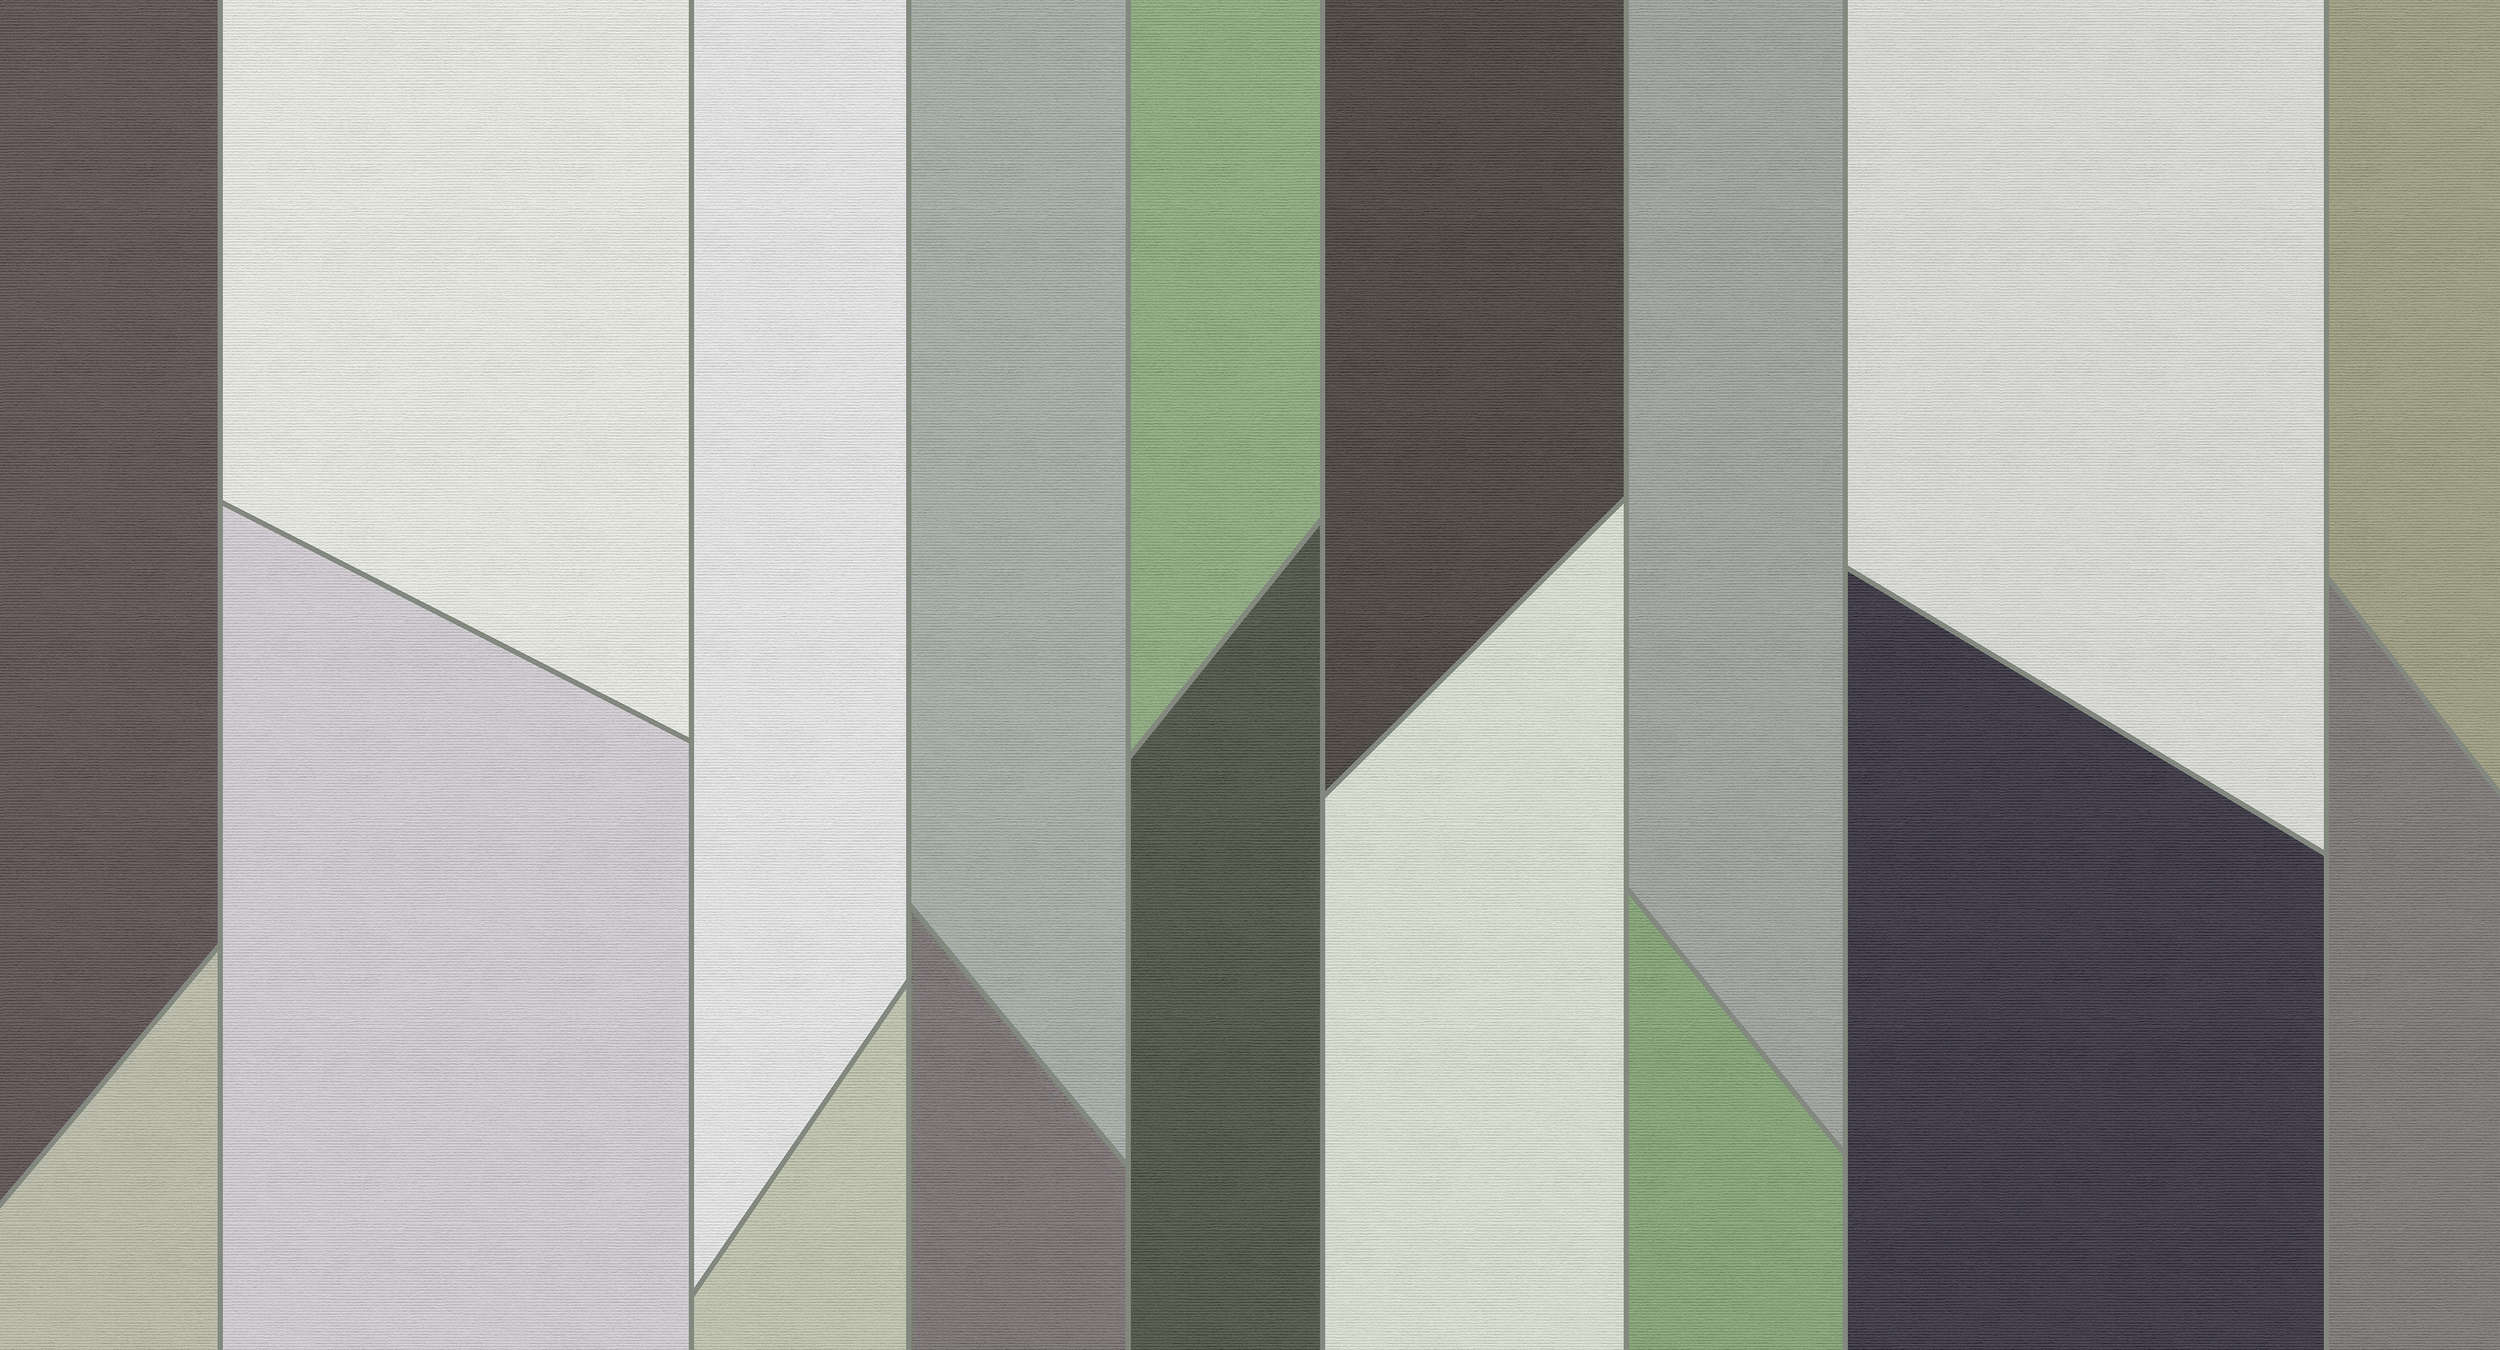             Geometry 3 - Striped wallpaper in ribbed structure with colourful retro design - Green, Purple | Matt smooth non-woven
        